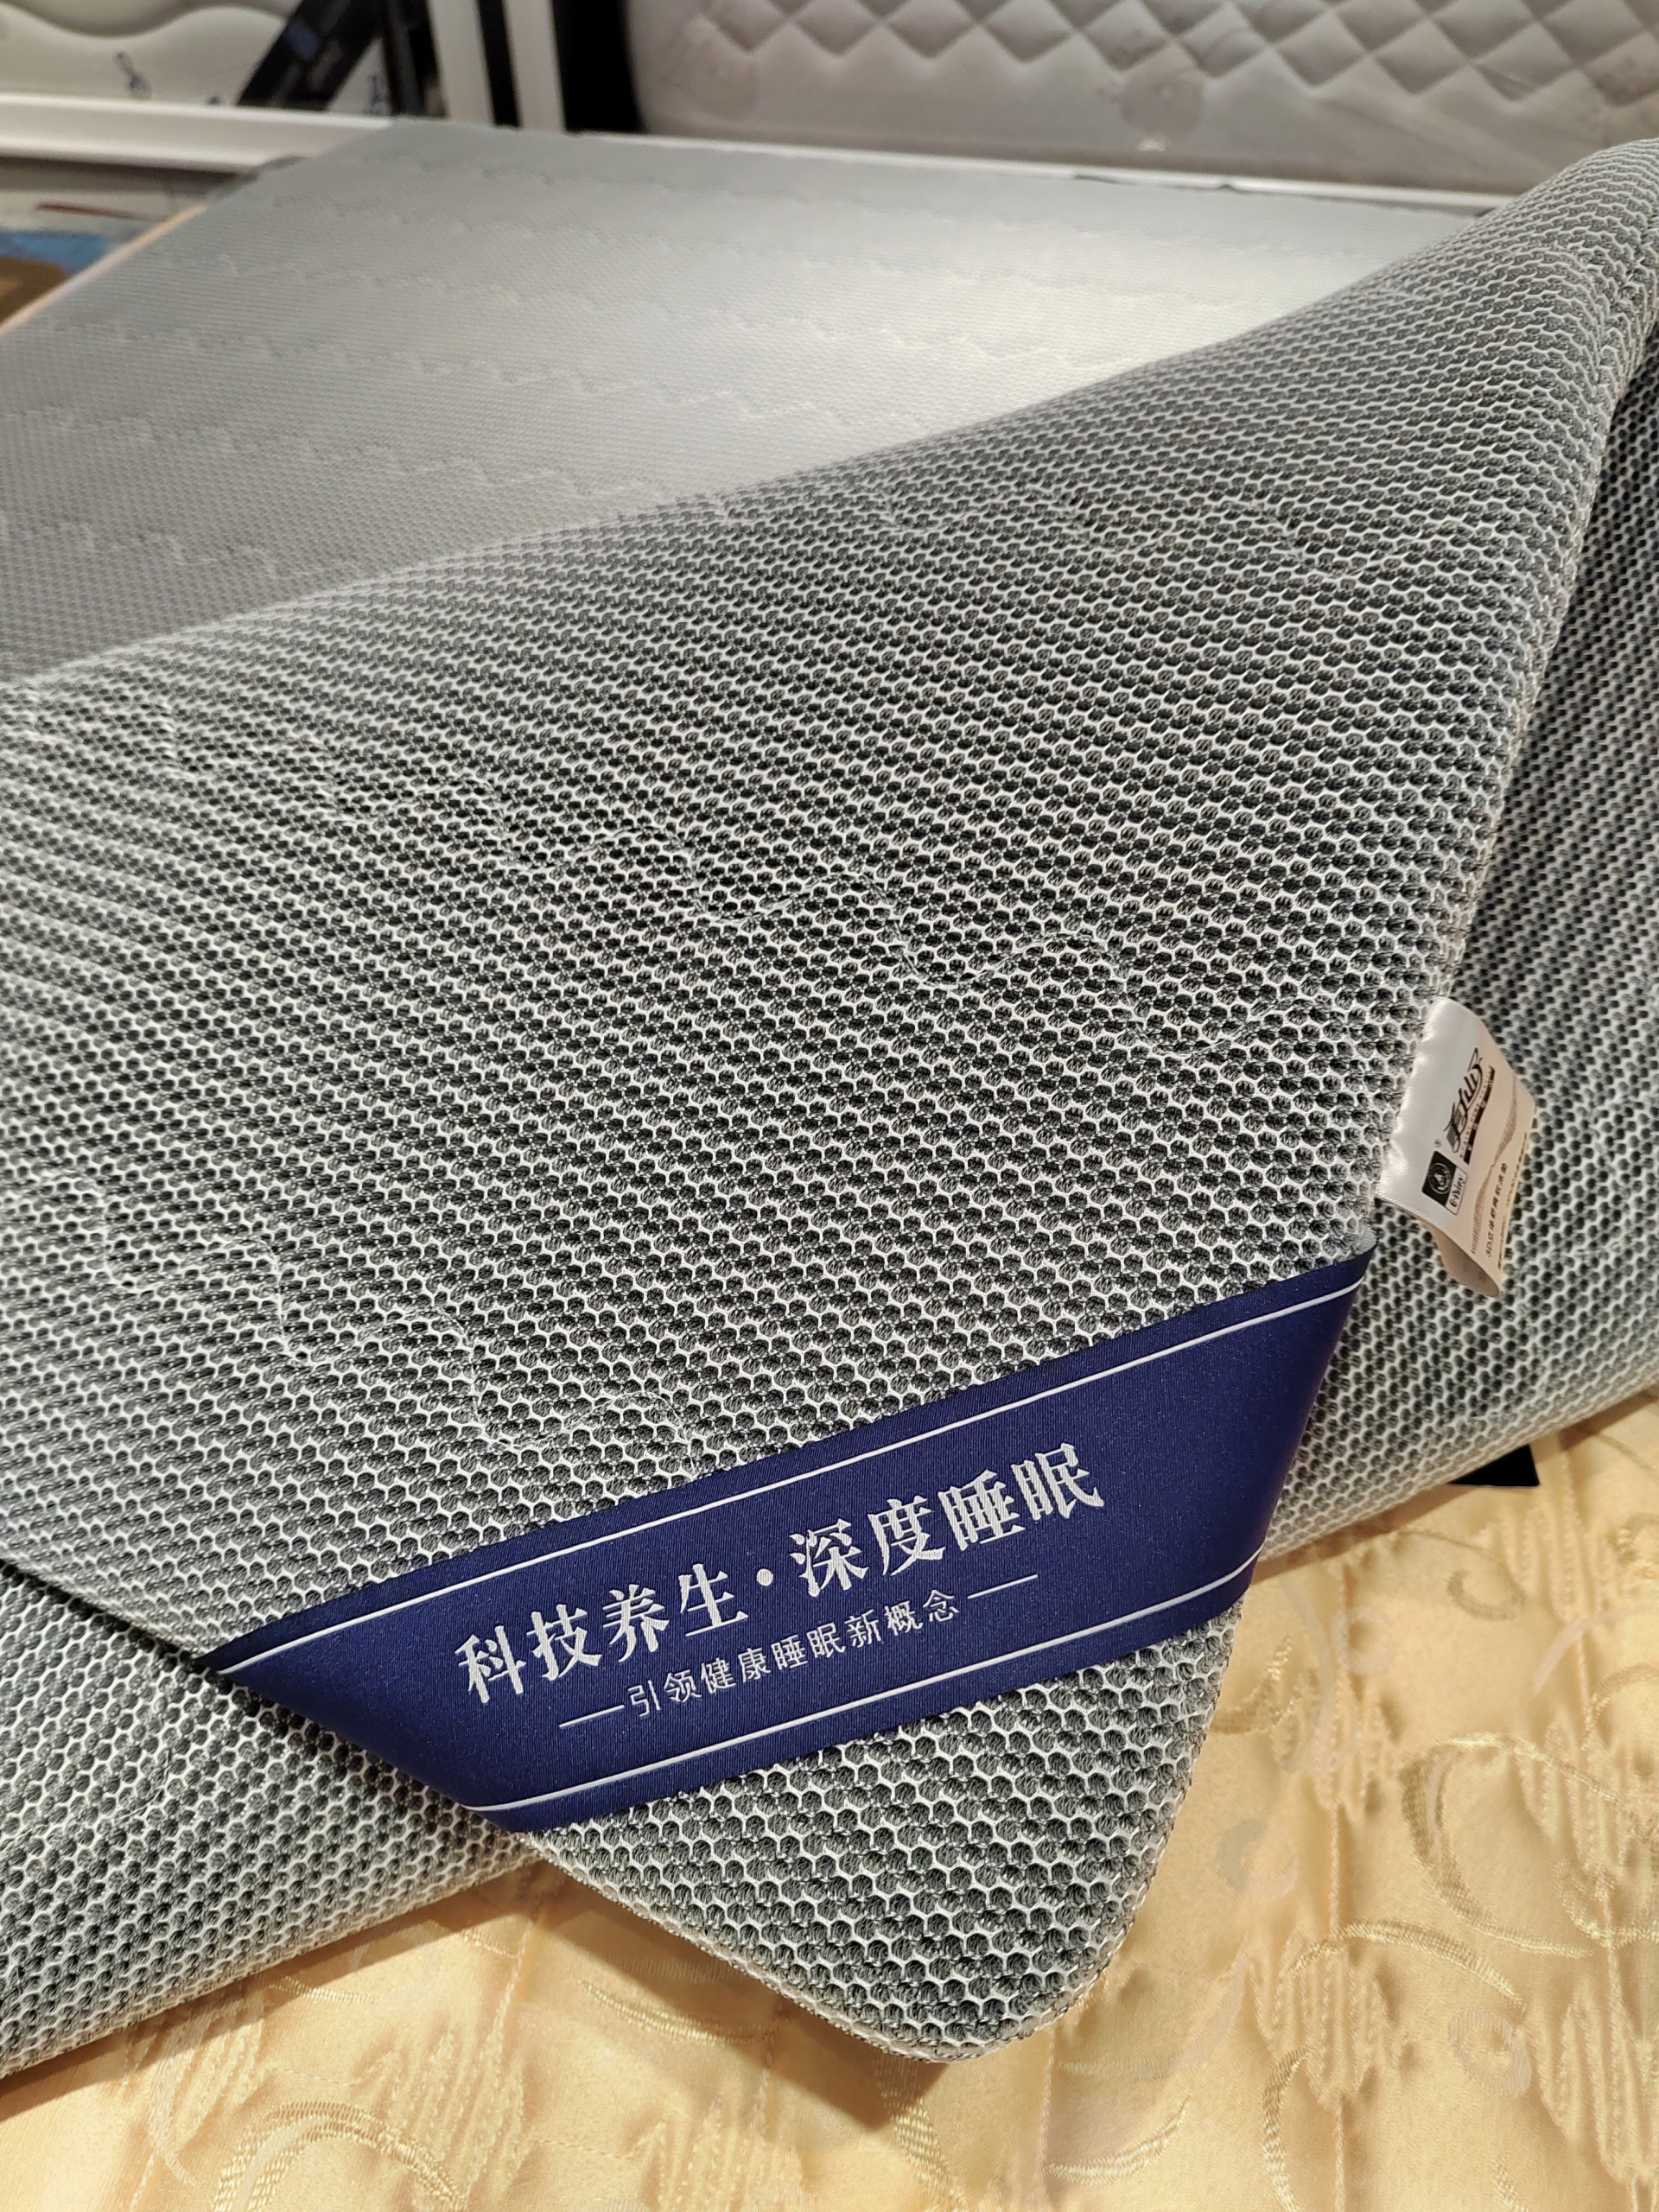 B05-3D three-dimensional comfortable soft mattress